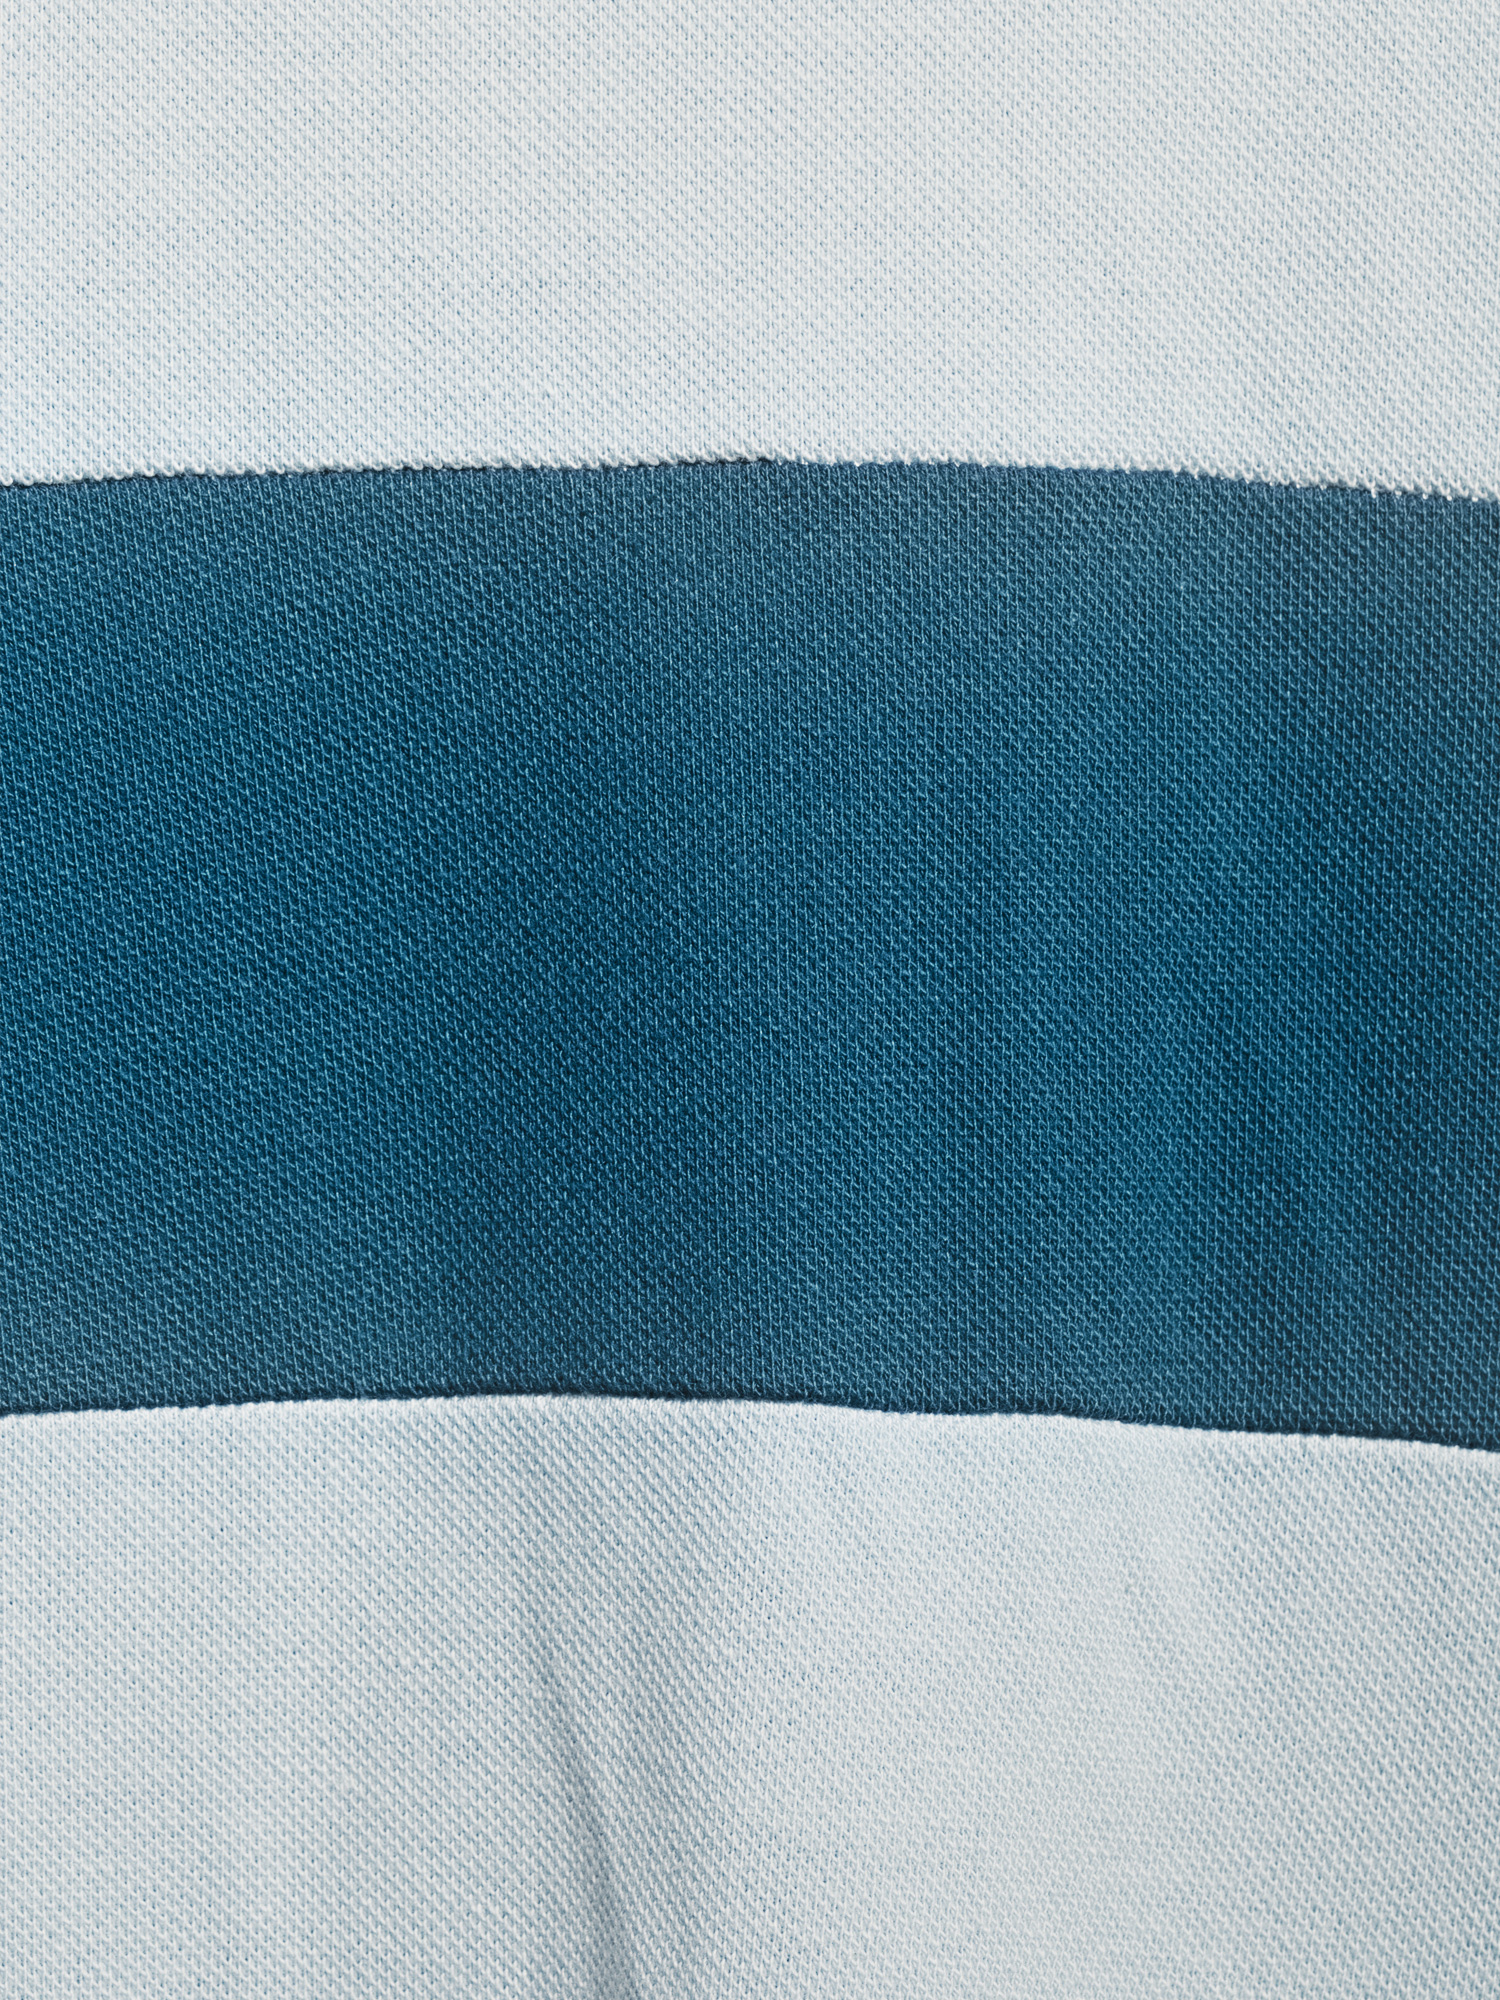 Hollywood Men's Colorblocked Pique Long Sleeve Crew Shirt, S-2XL, Mens Long Sleeve T-Shirts - image 4 of 6